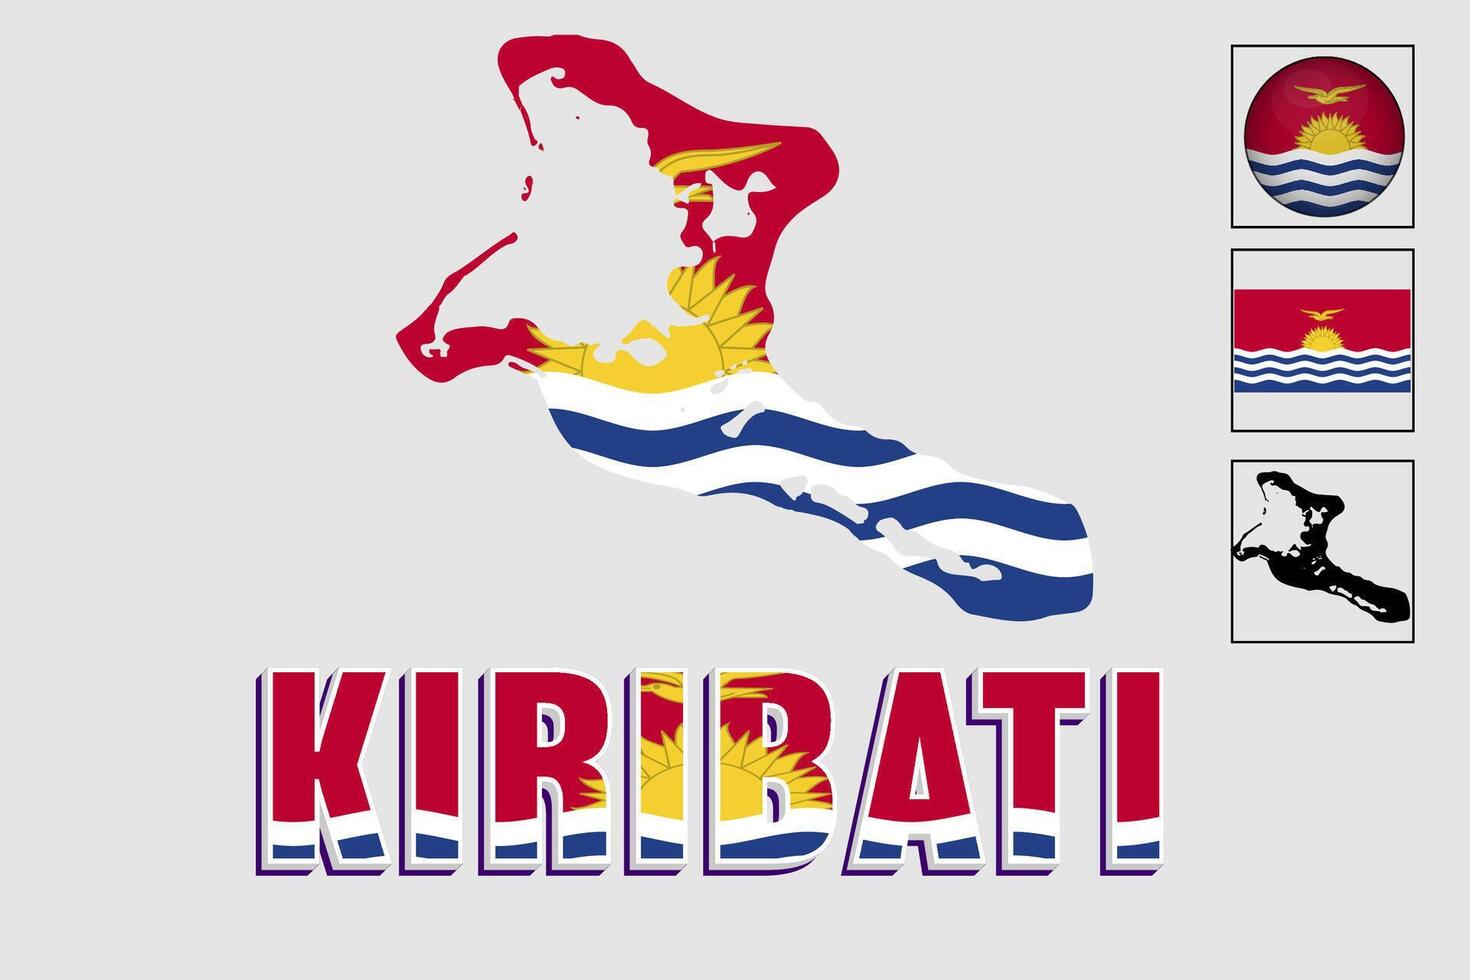 Kiribati carte et drapeau dans vecteur illustration